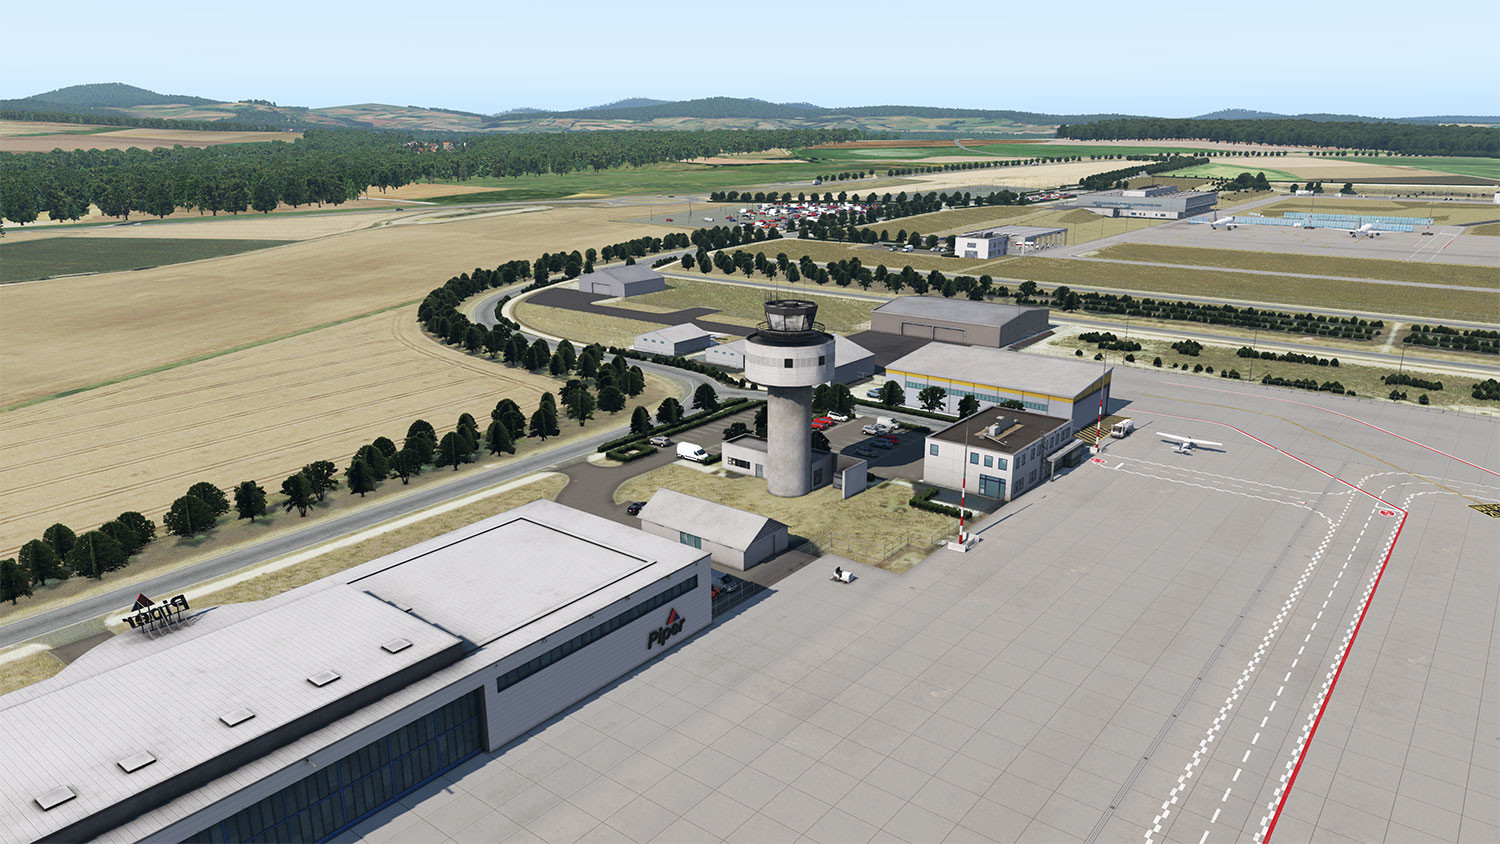 Save 30% on X-Plane 11 - Add-on: Aerosoft - Airport Kassel on Steam